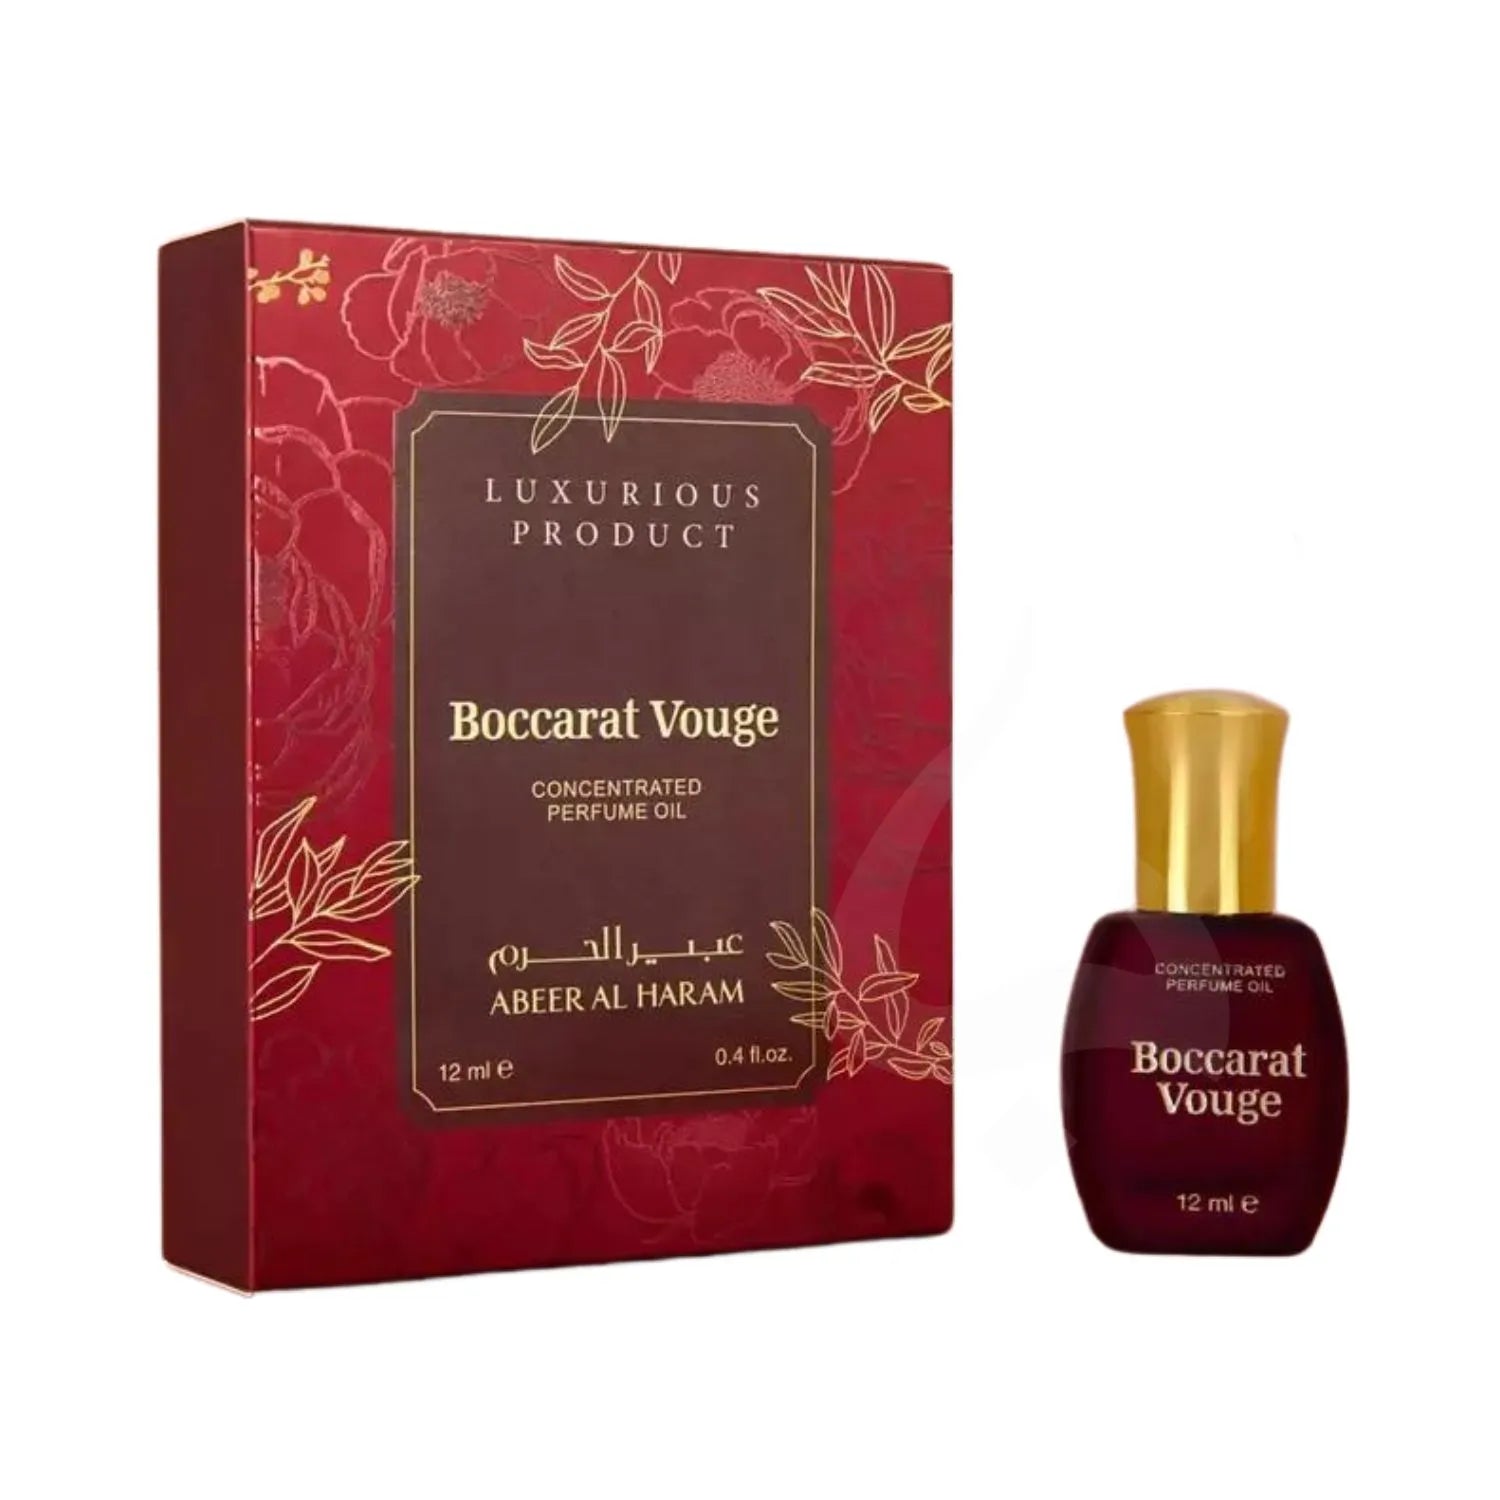 Boccarat Vouge Perfume Oil Package